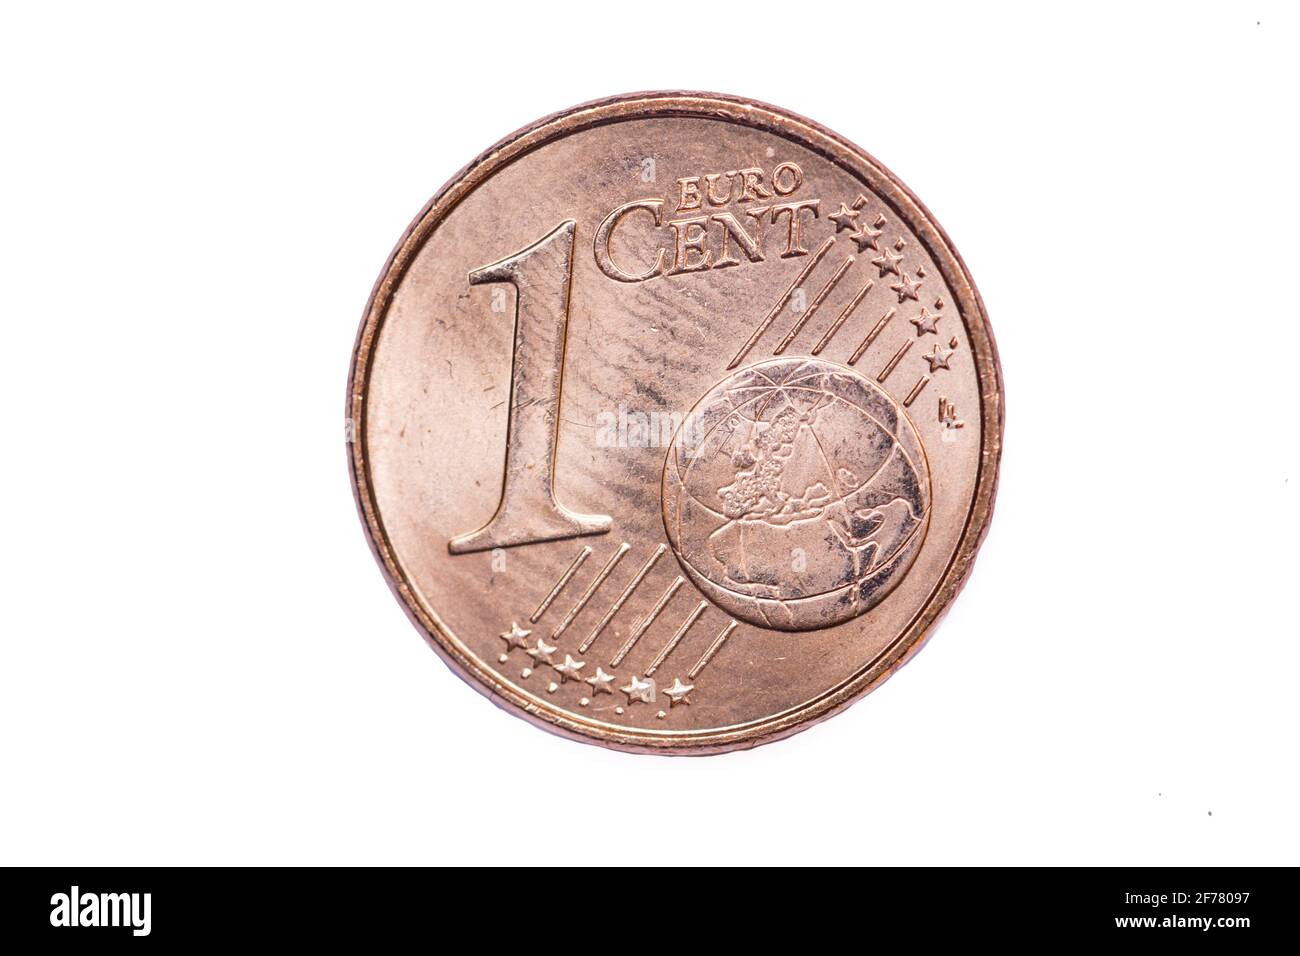 France, official money, euros Stock Photo